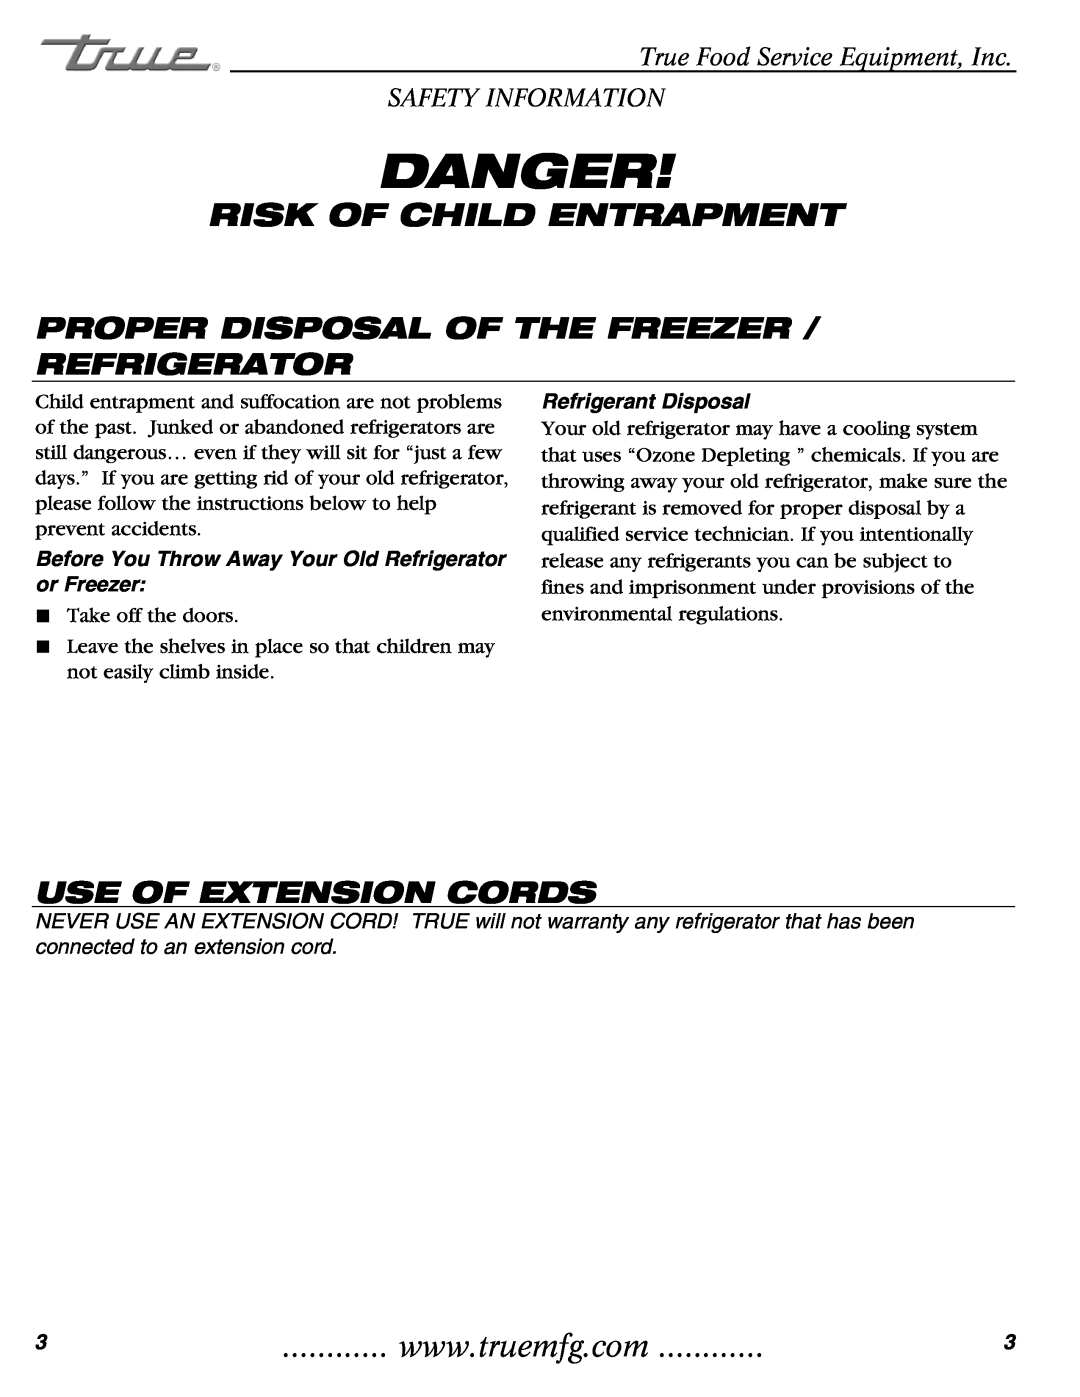 True Manufacturing Company T-35 Risk Of Child Entrapment, Proper Disposal Of The Freezer / Refrigerator, Danger 